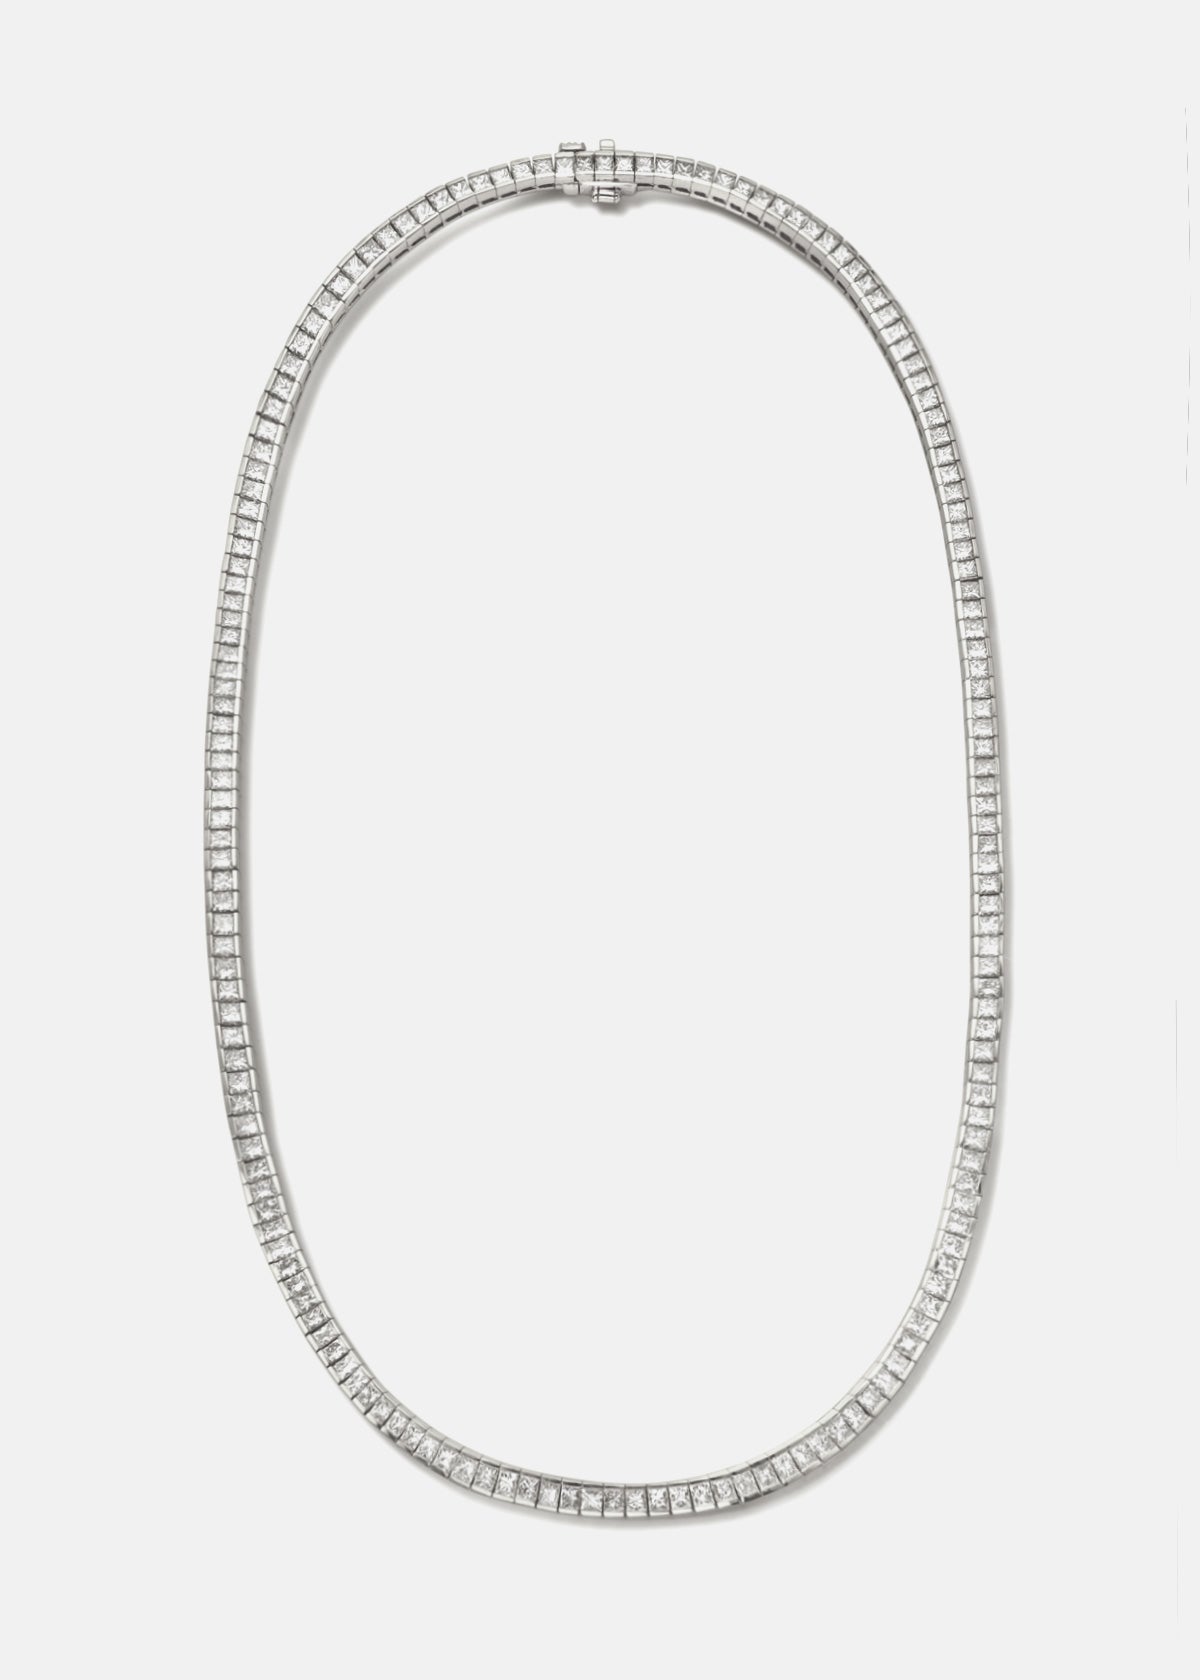 Diana Porter 'eternity' gold pendant necklace